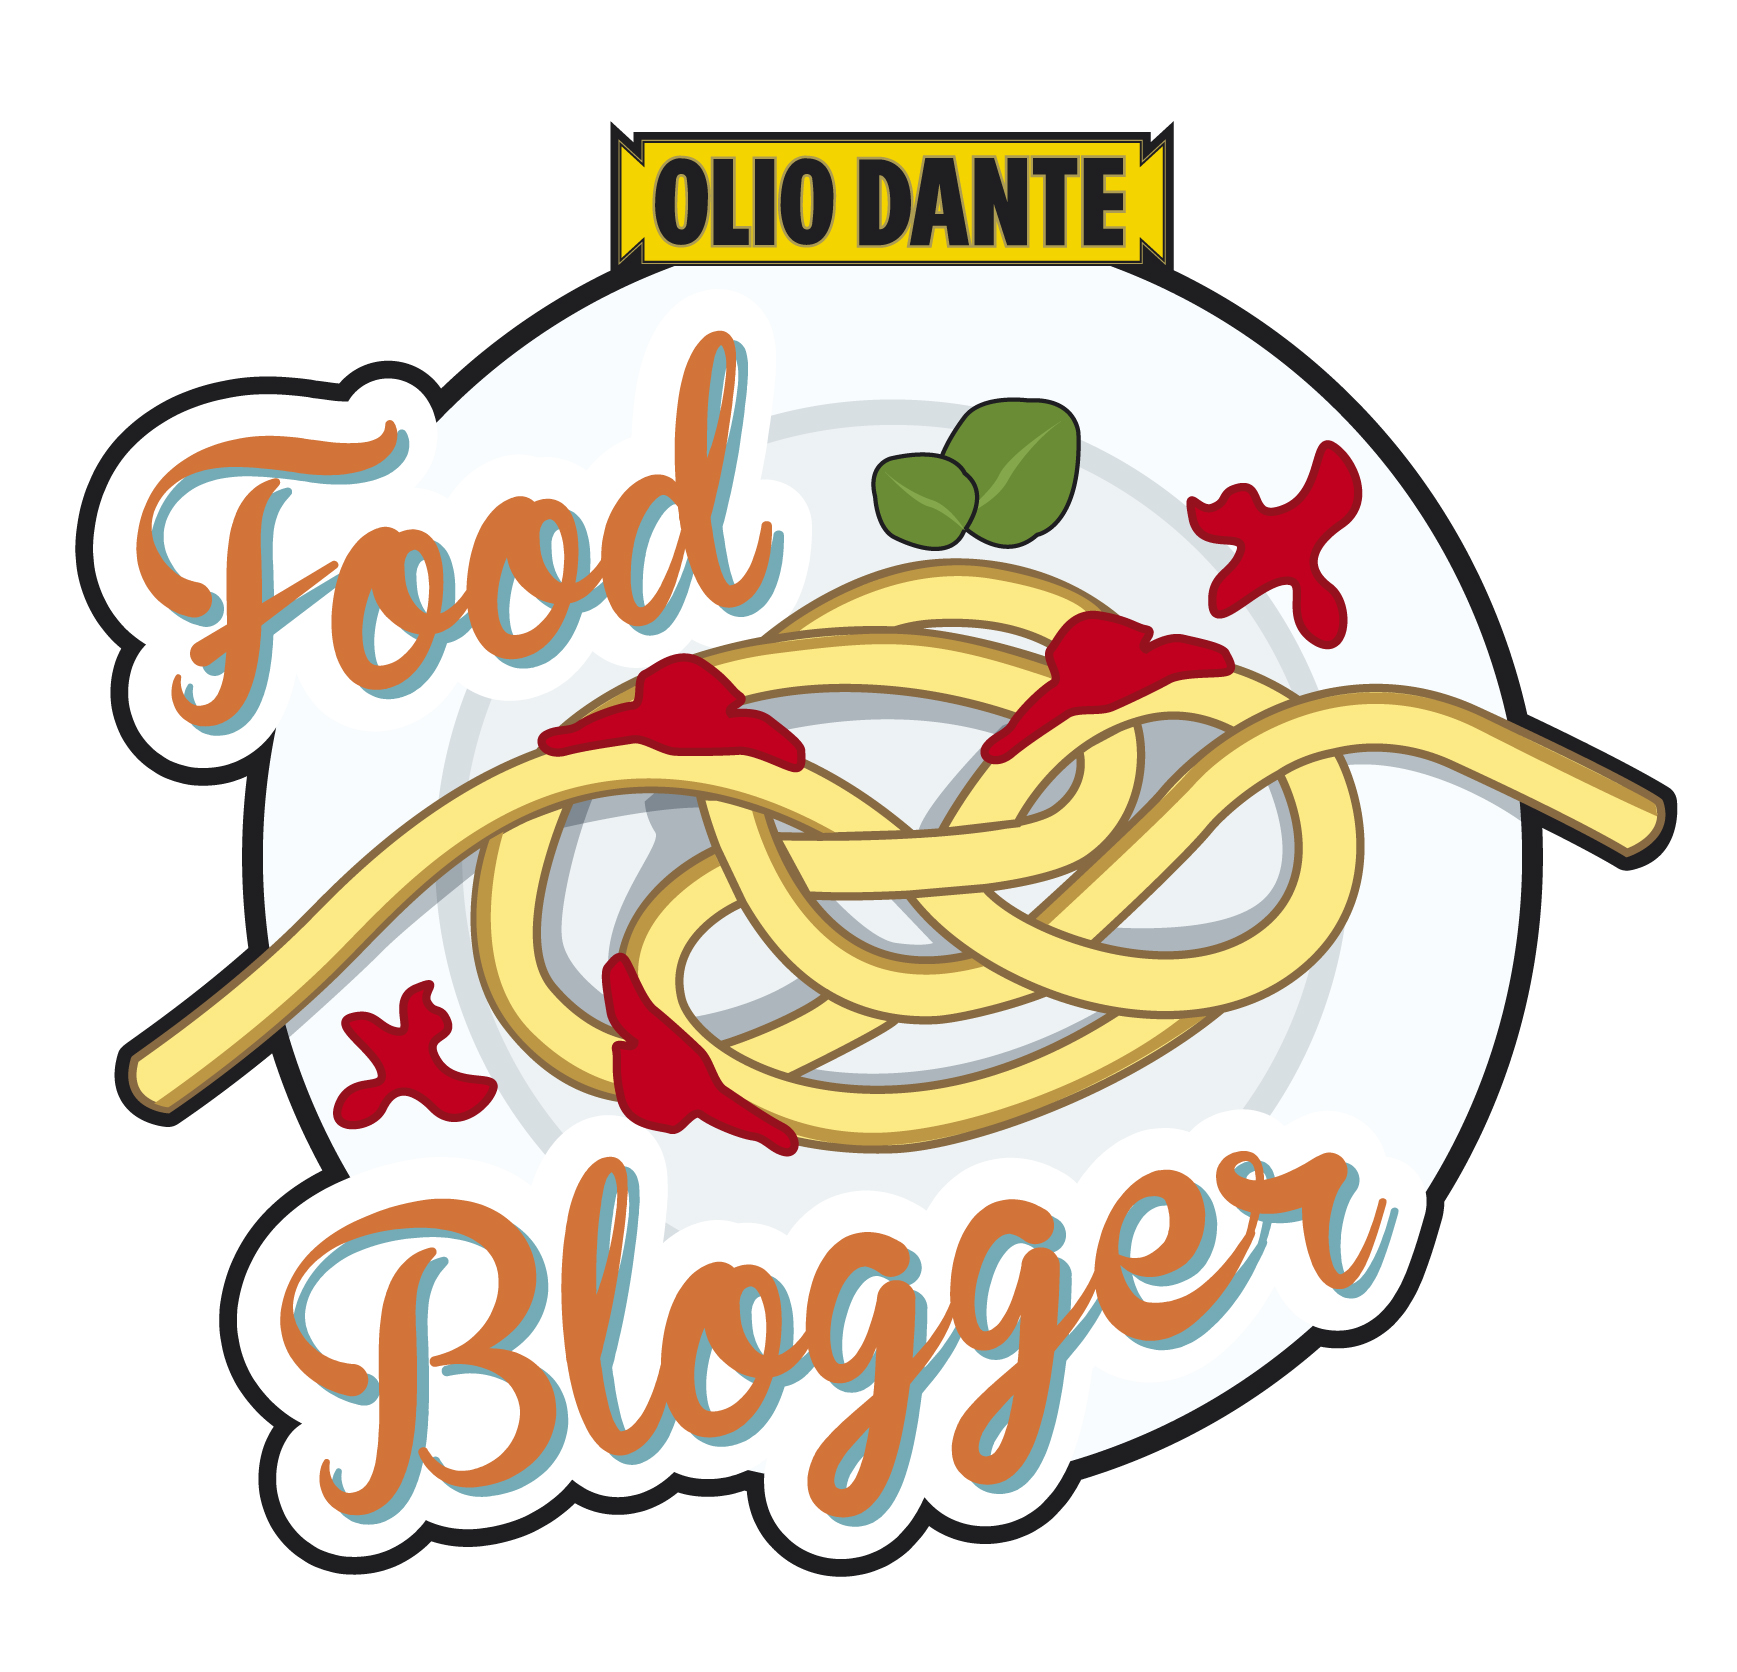 Logo_Foodblogger